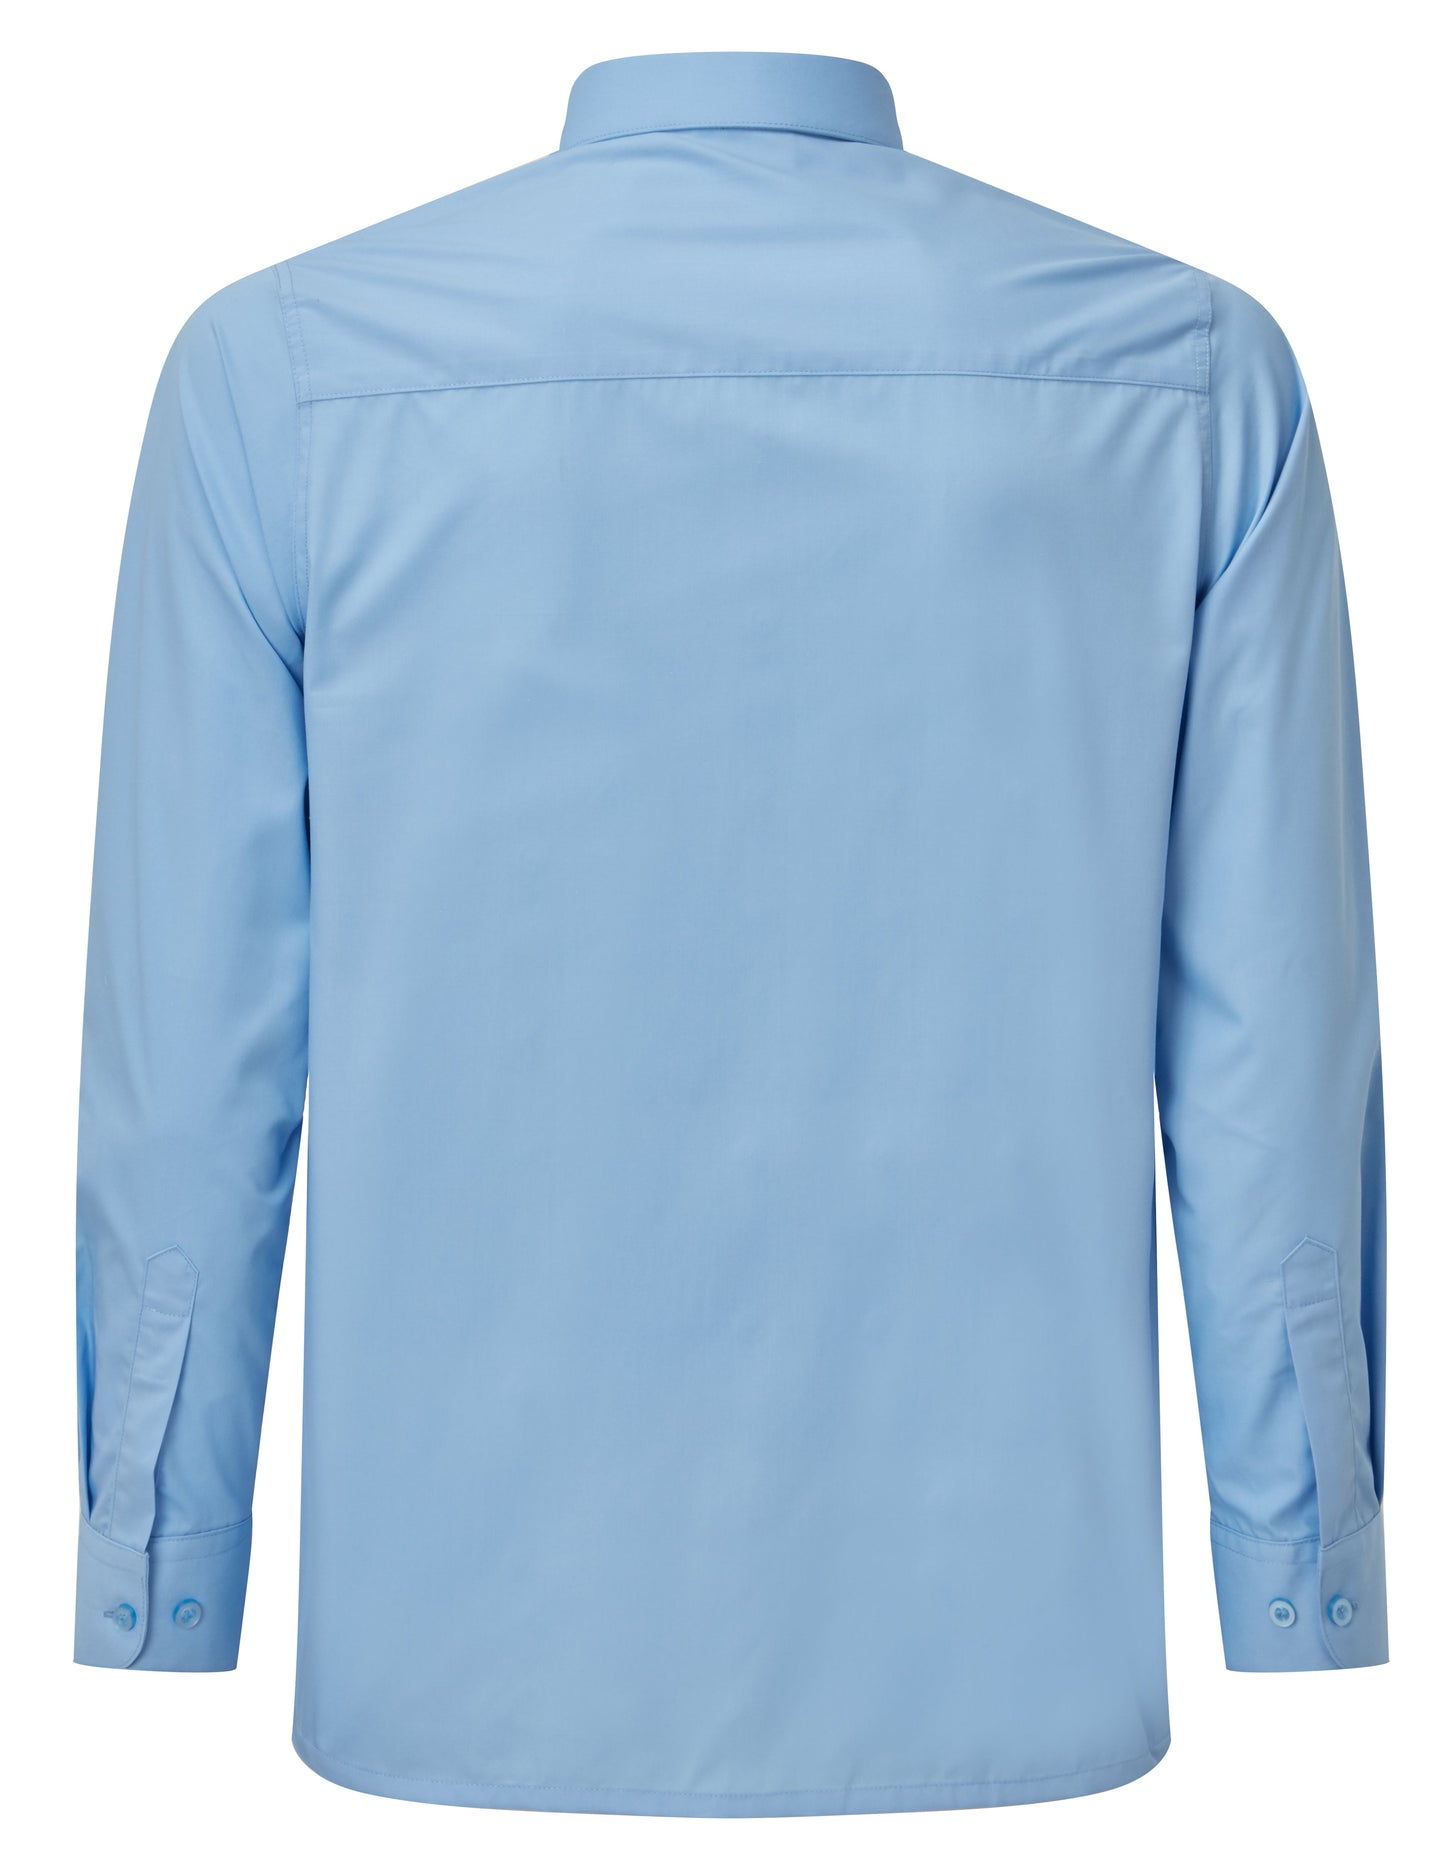 Blue - Boys' Long Sleeve Shirt (Twin Pack)